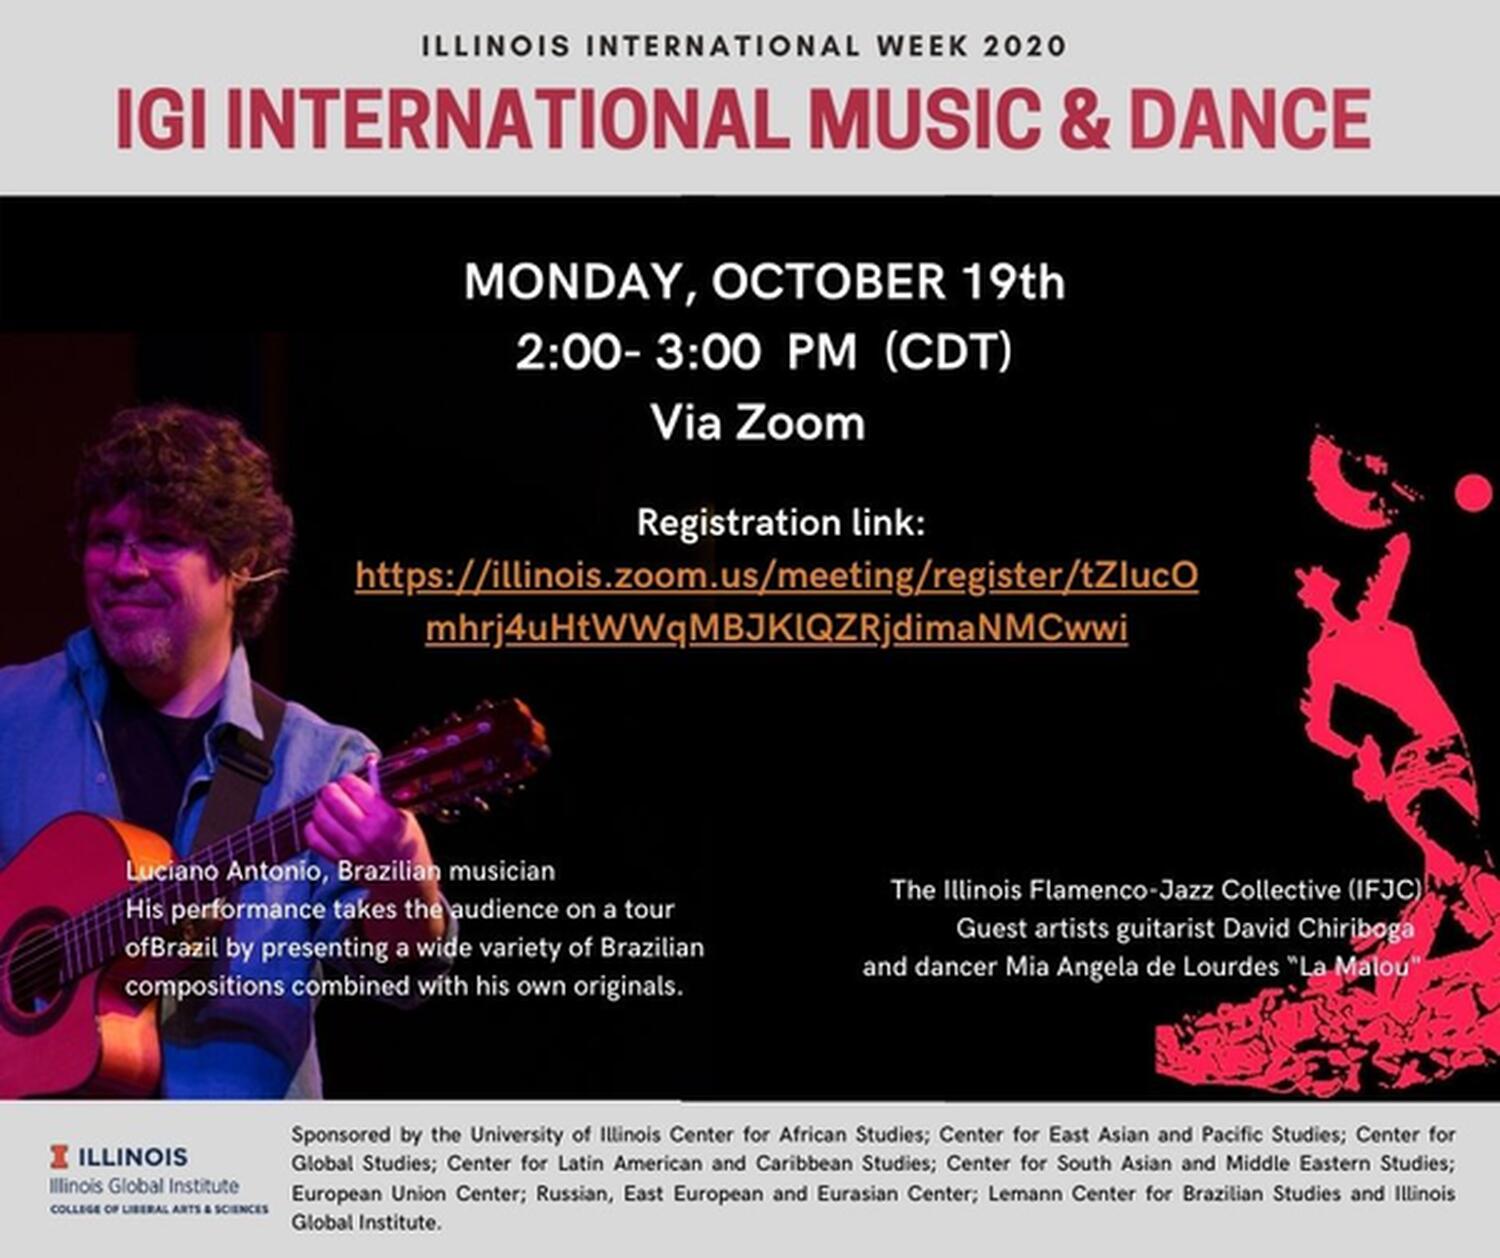 IGI International Music & Dance event